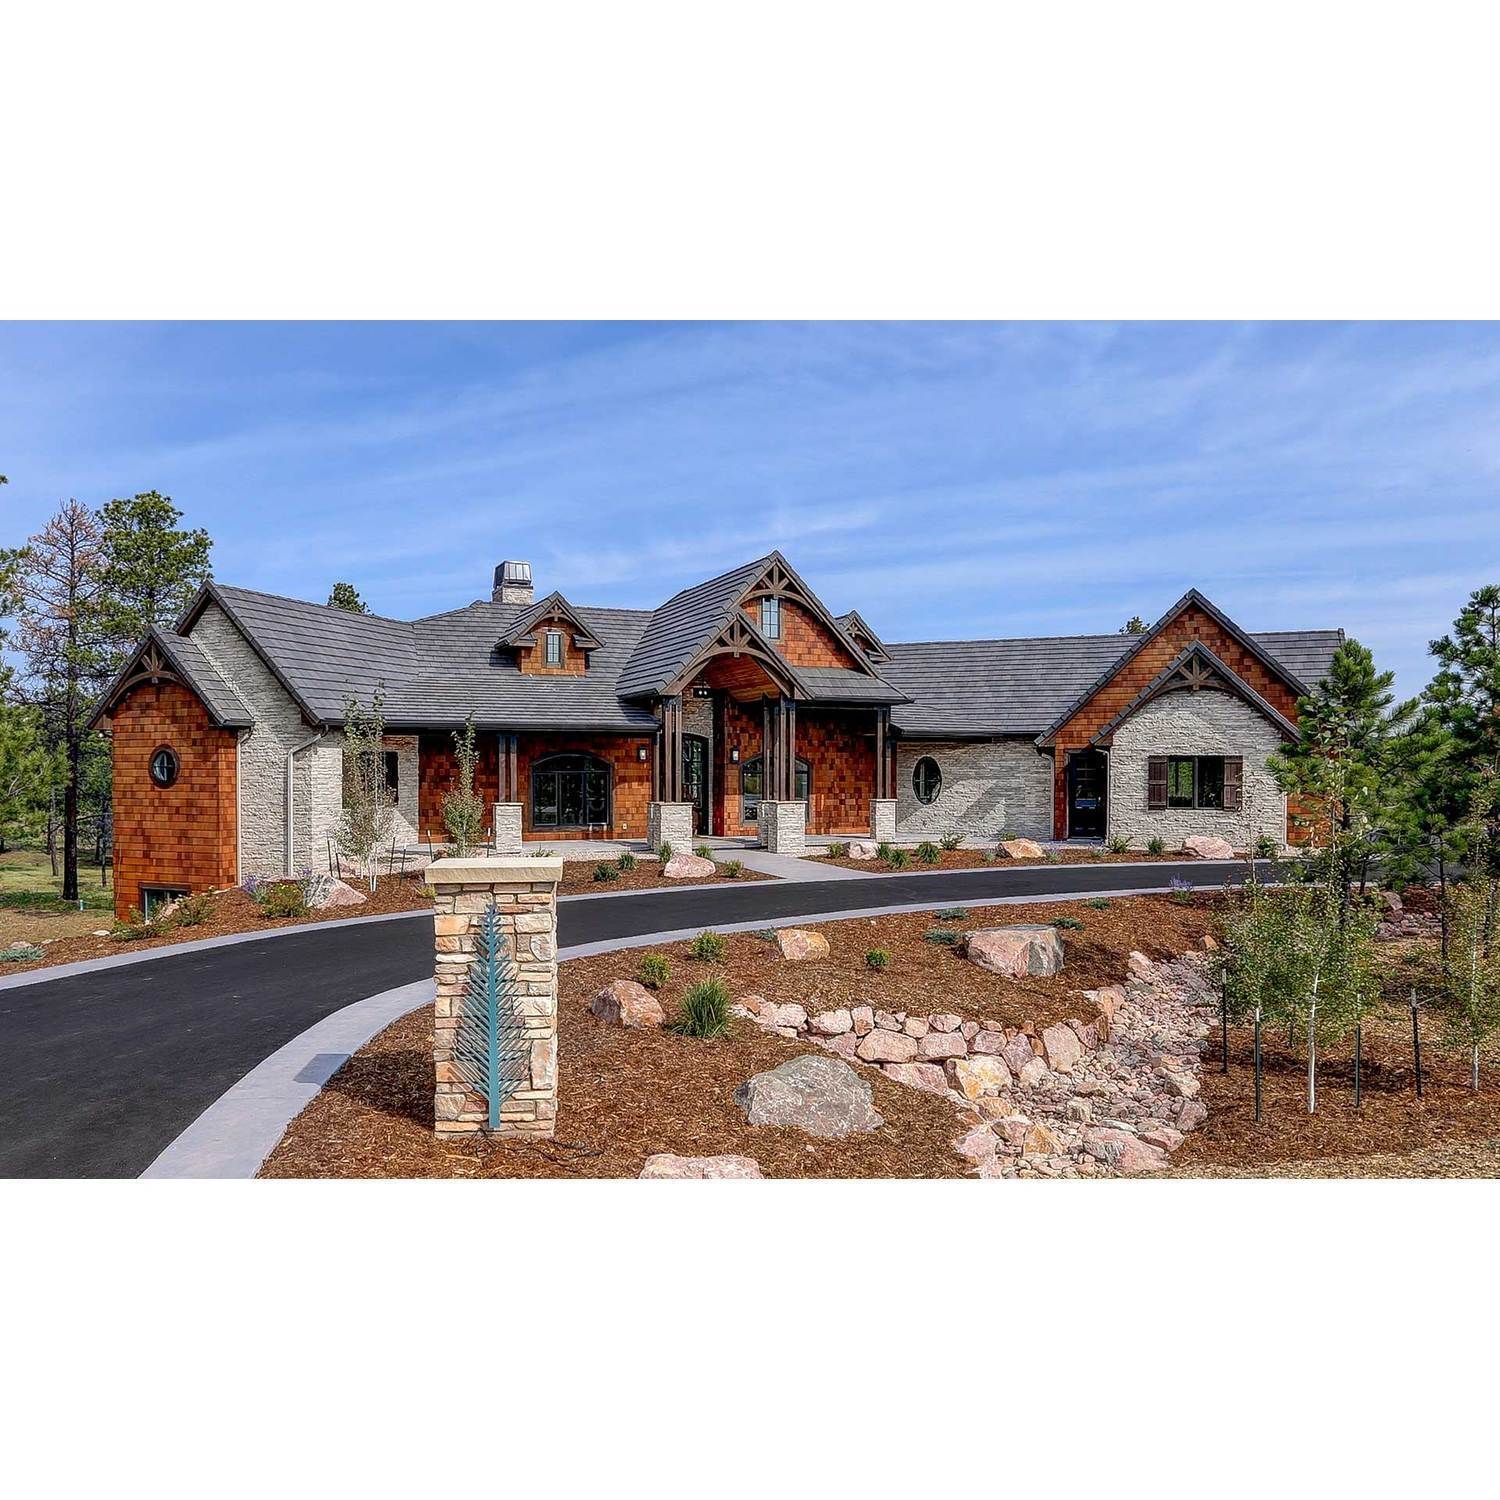 35. Galiant Homes building at 4783 Farmingdale Dr, Colorado Springs, CO 80918